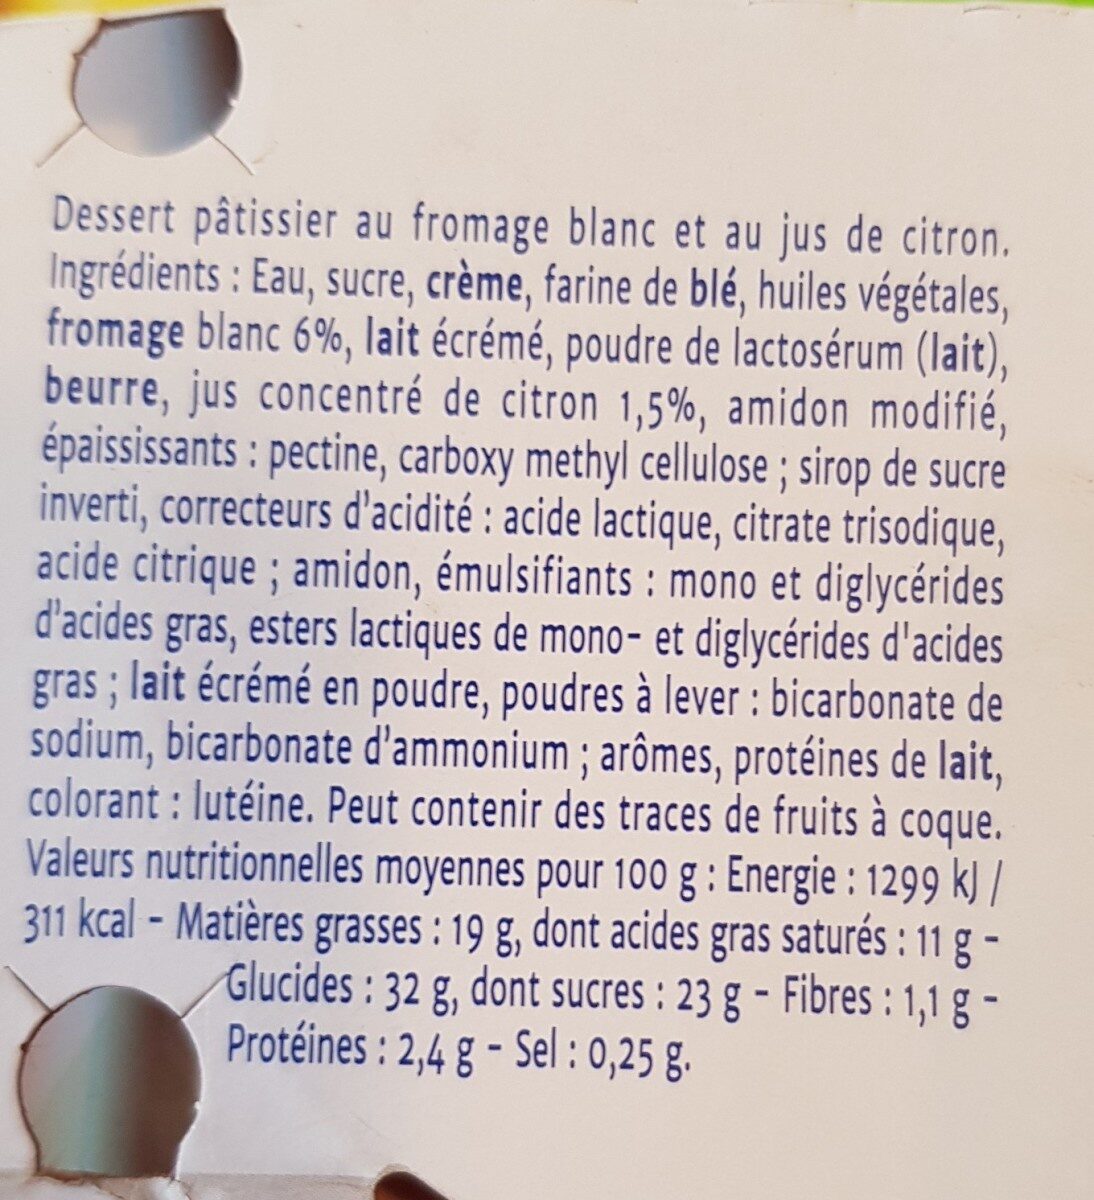 Cheese cake citron - Ingredients - fr